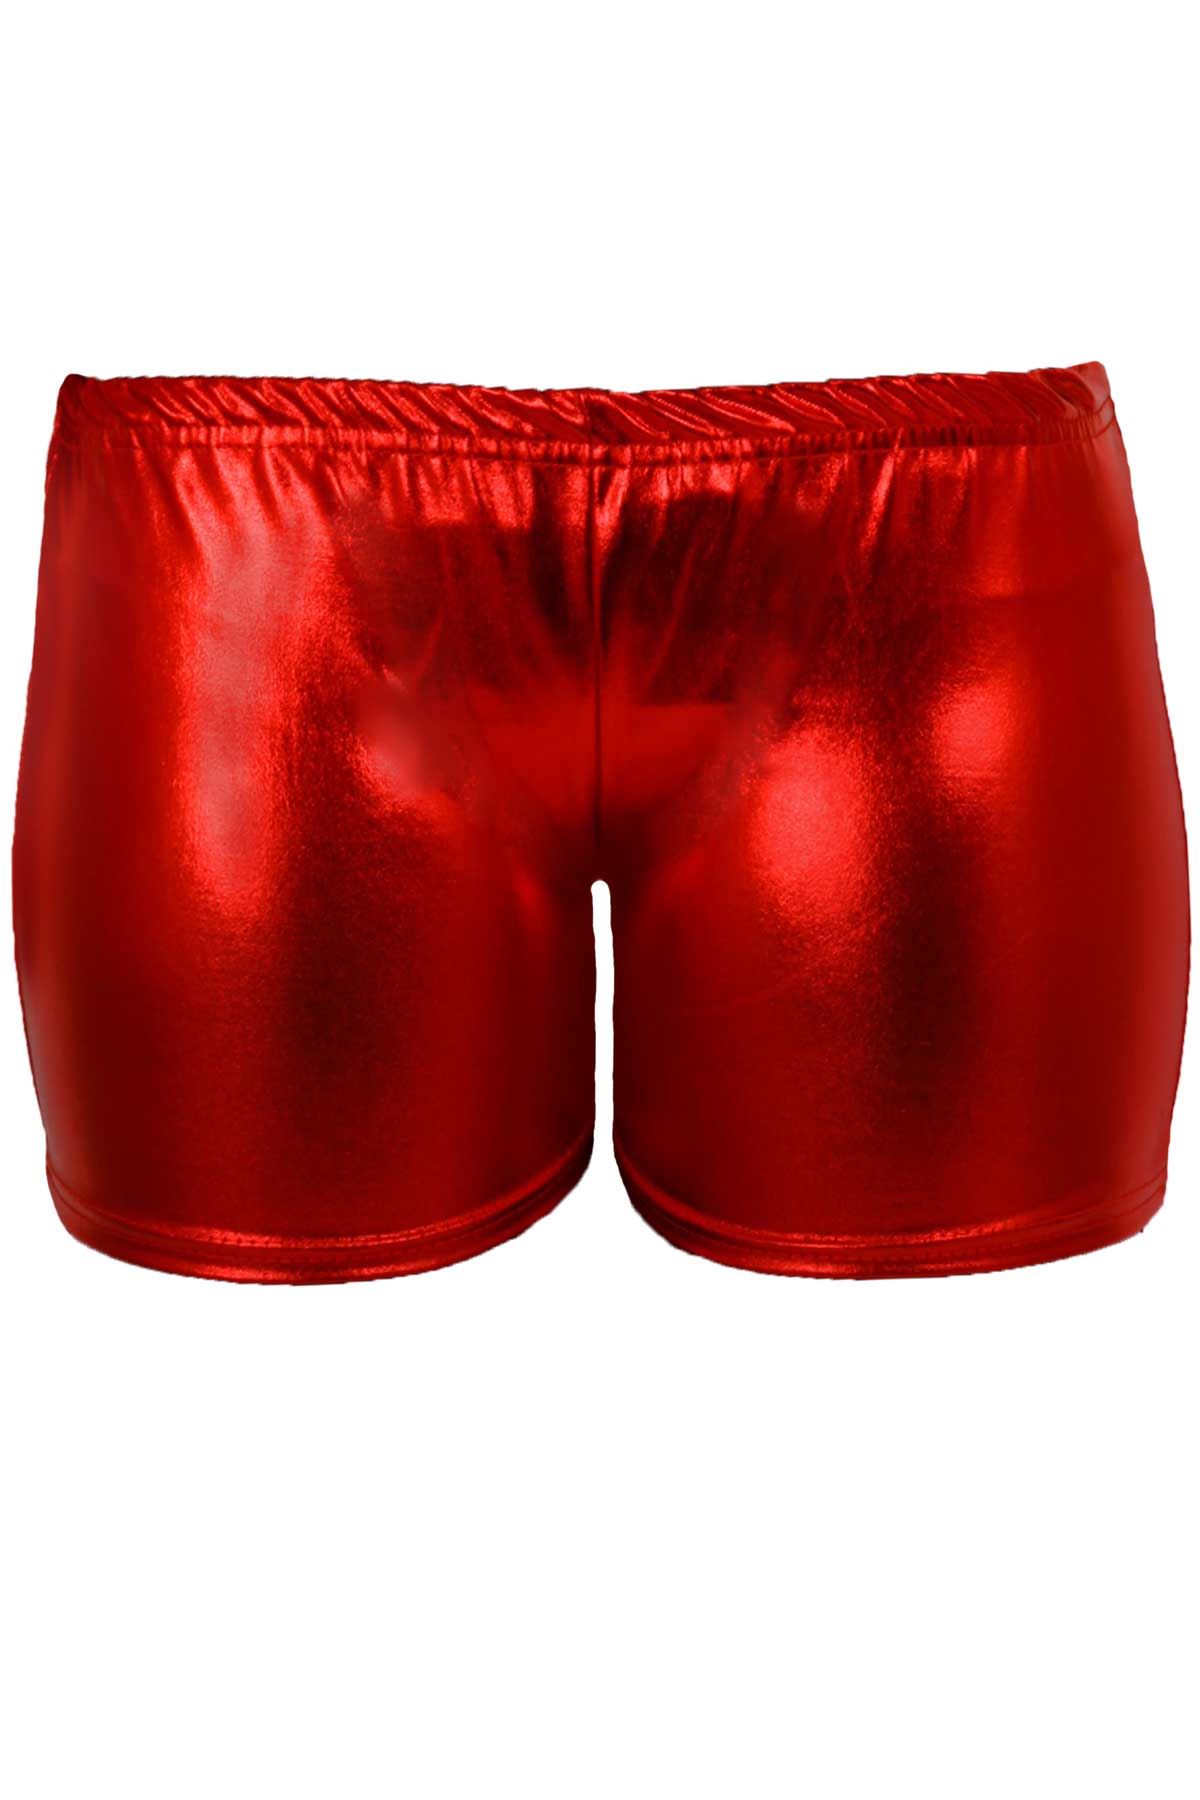 Red Shorts Hot Pants - Costume Wonderland